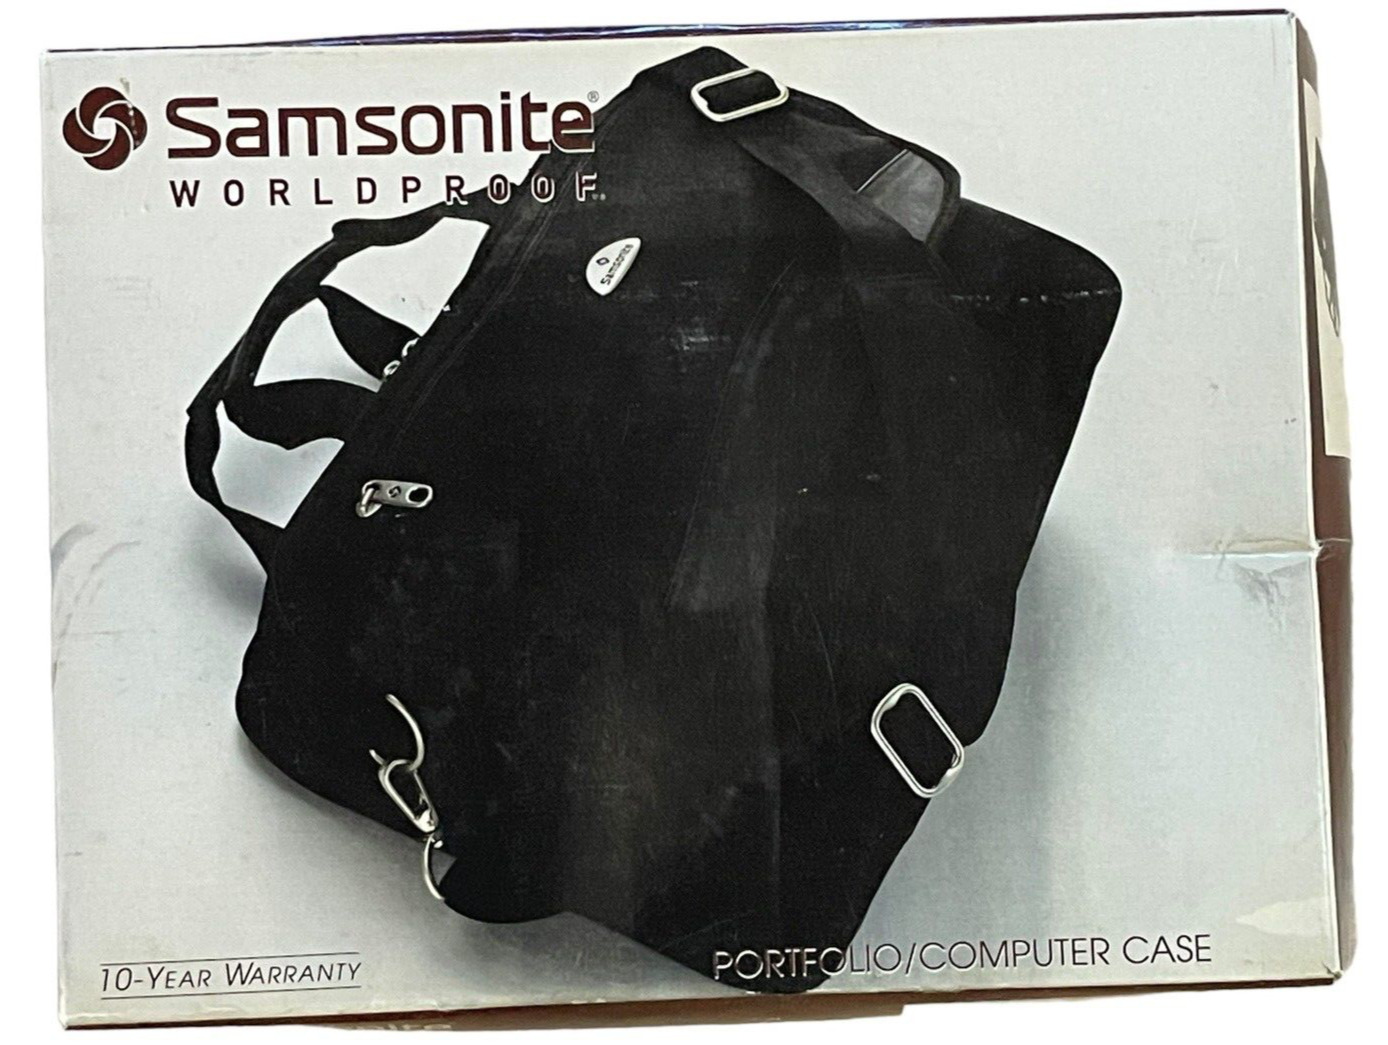 NIB Samsonite Worldproof Portfolio Computer Case #930765 Black 16